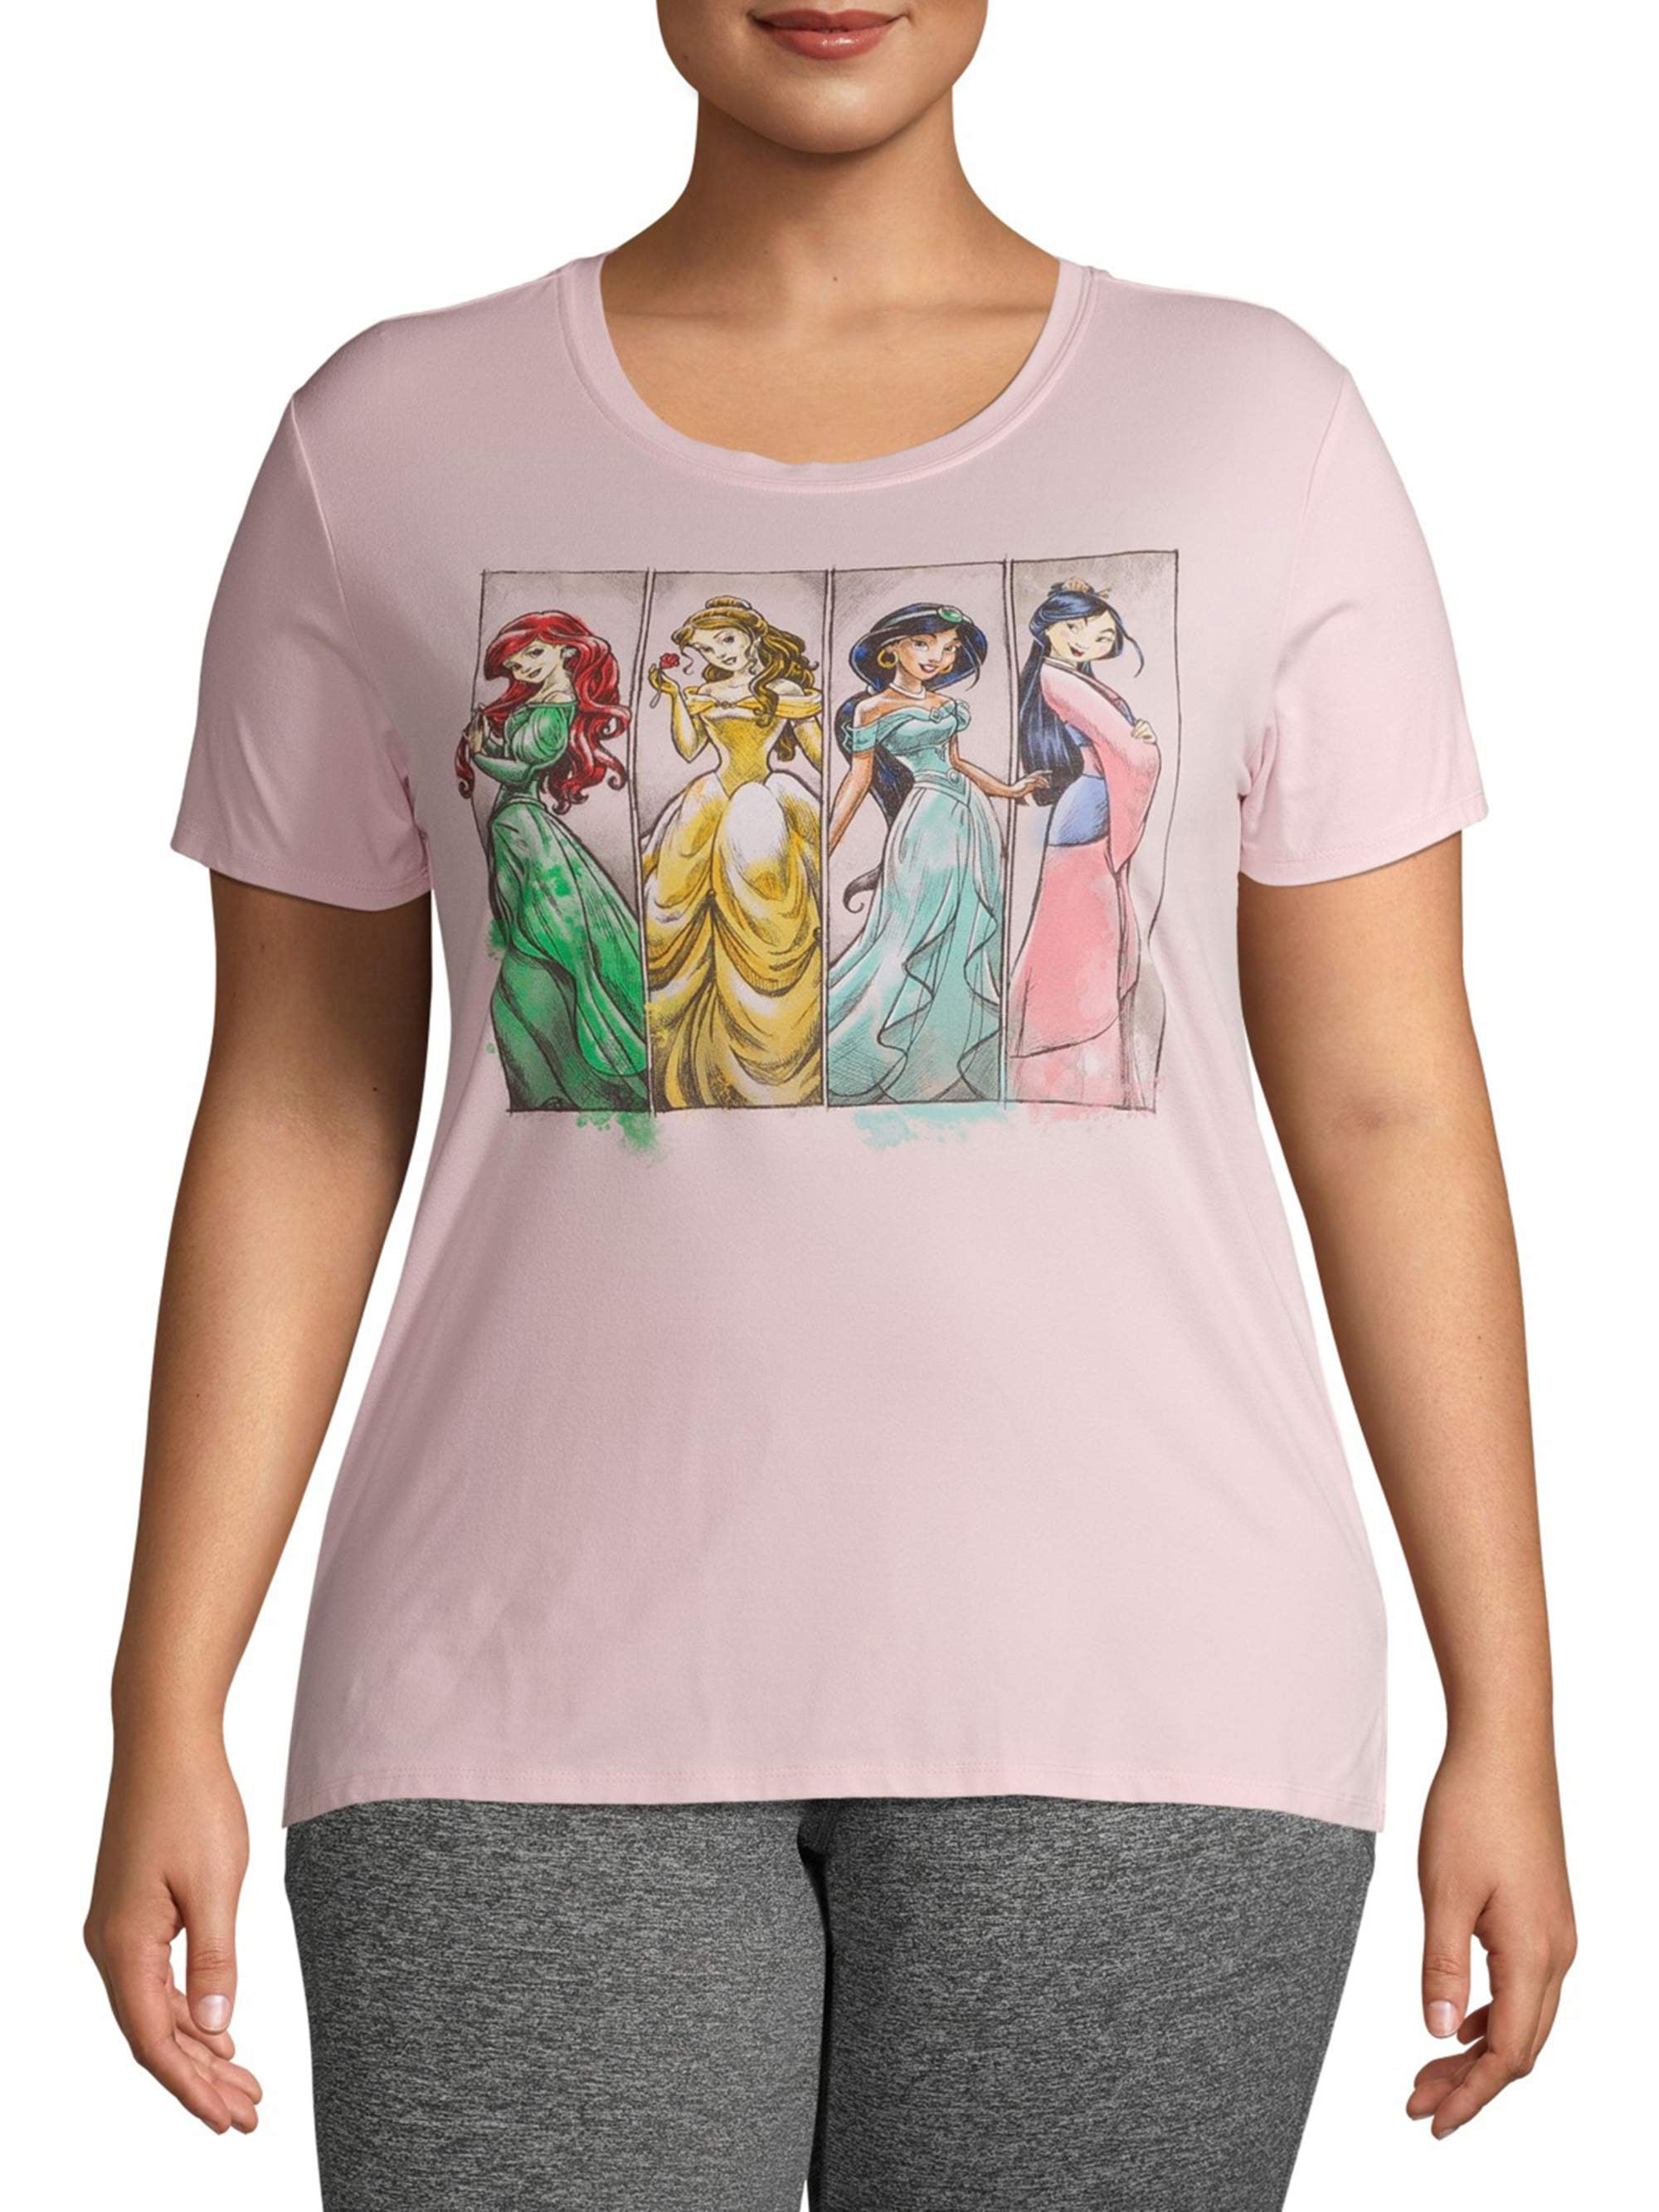 Lady Bird T-Shirt High Quality Microfiber Tee Men's Women's All Sizes